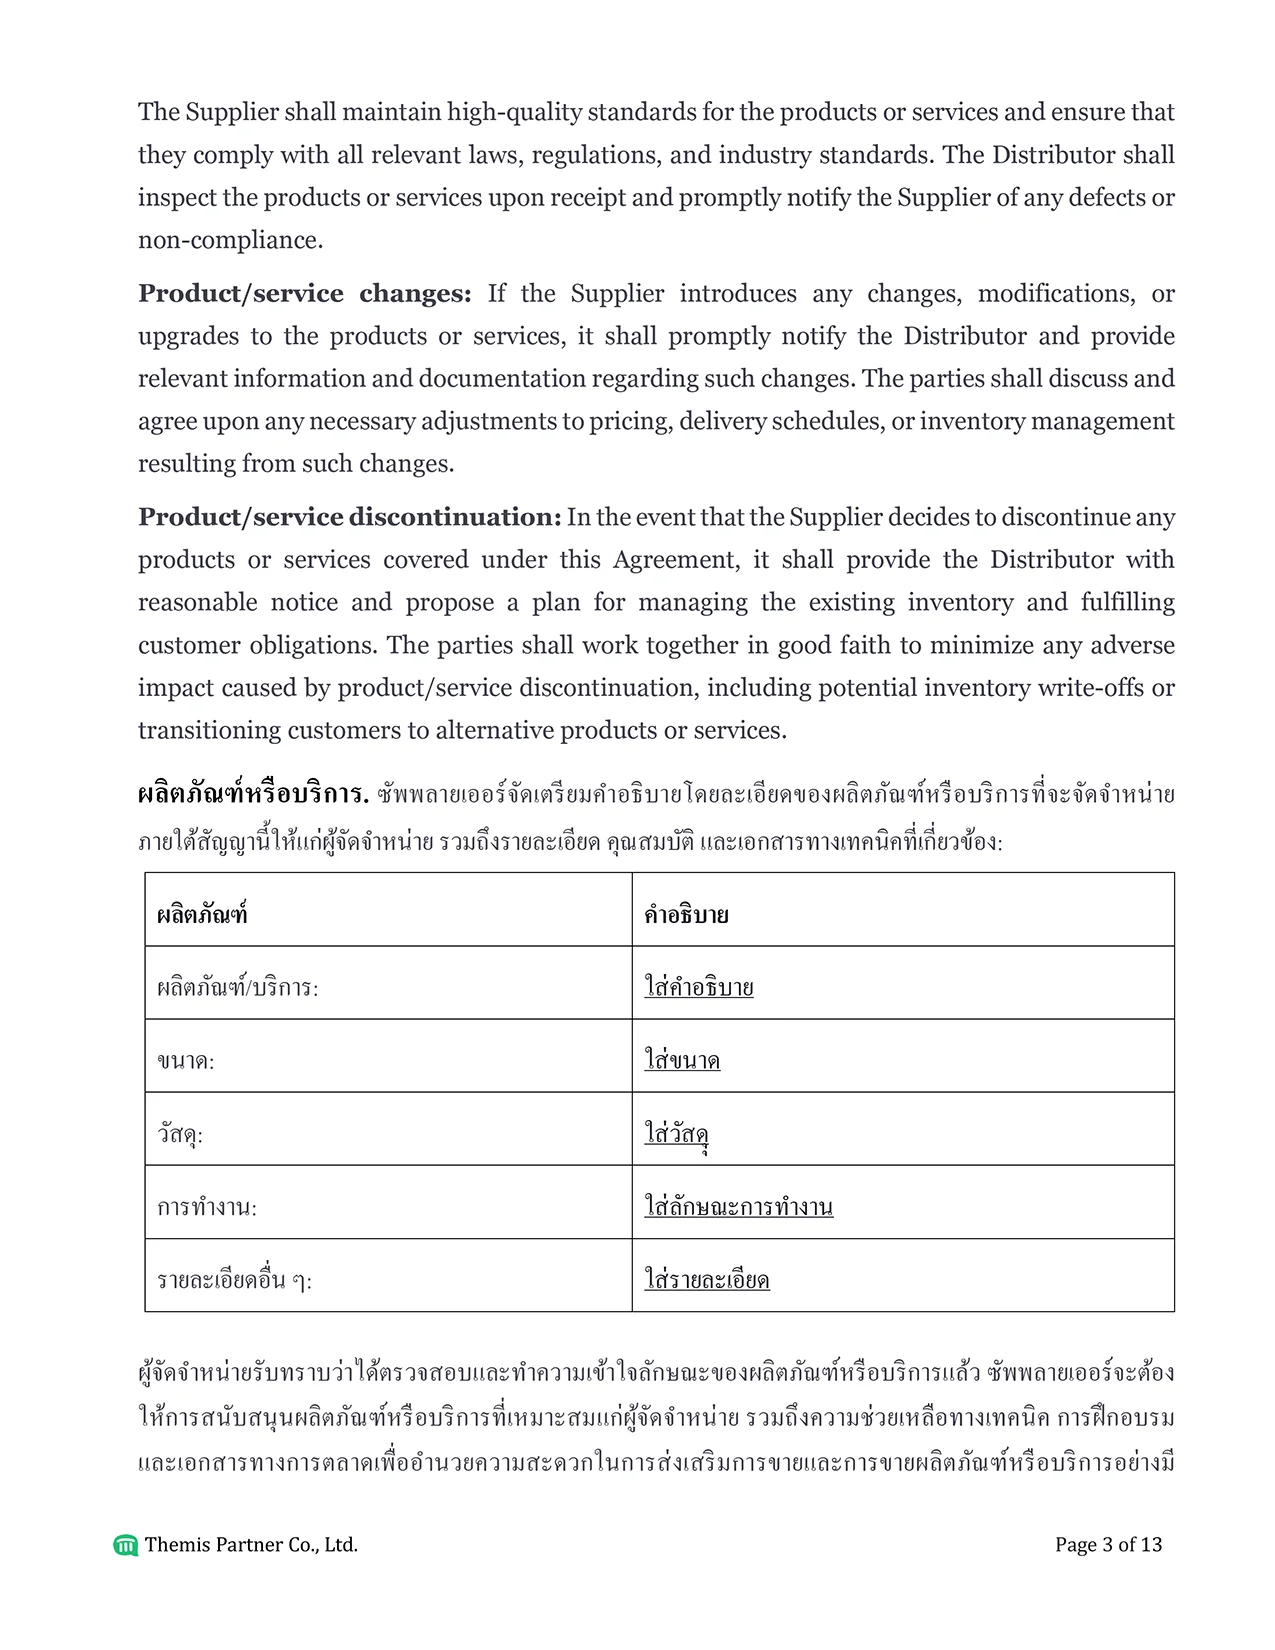 Distribution agreement Thailand 3